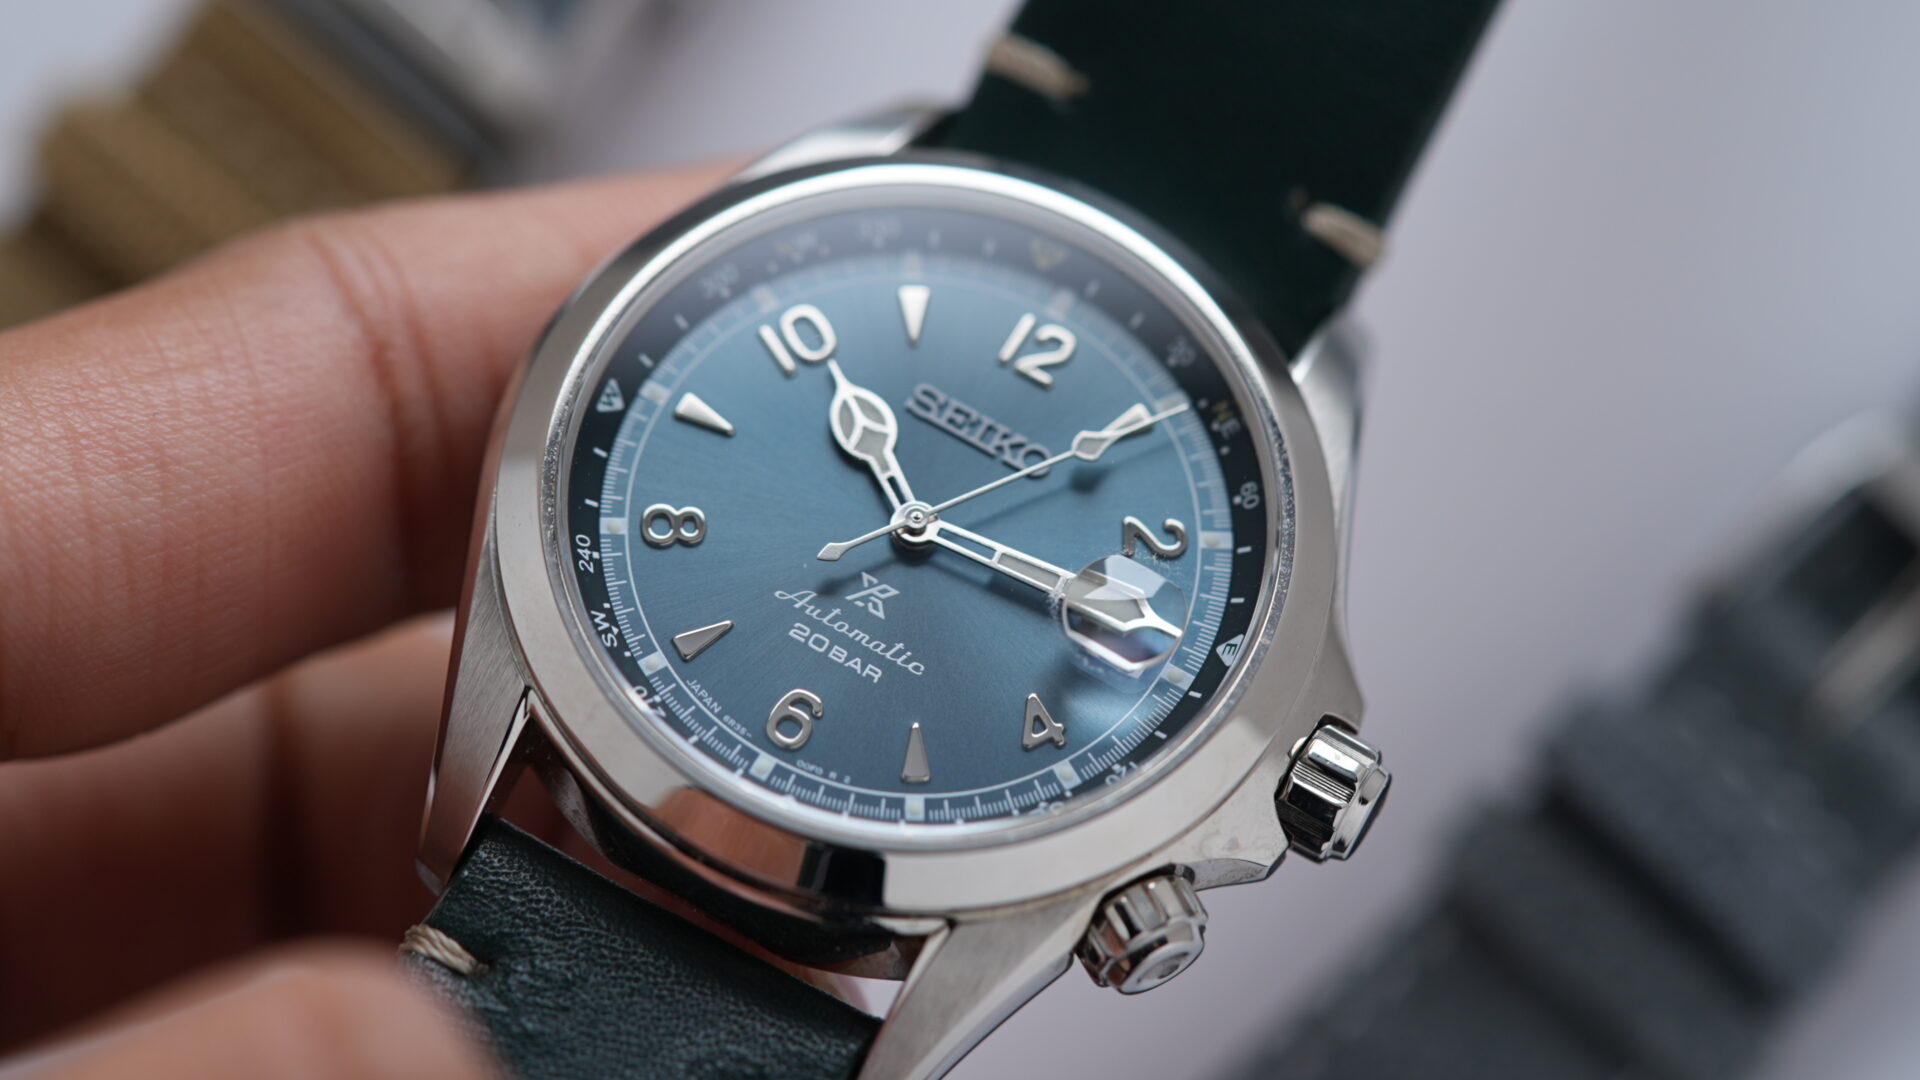 Seiko Alpinist Limited Edition Alpinist Mountain Glacier SPB199J1 watch being held in hand.